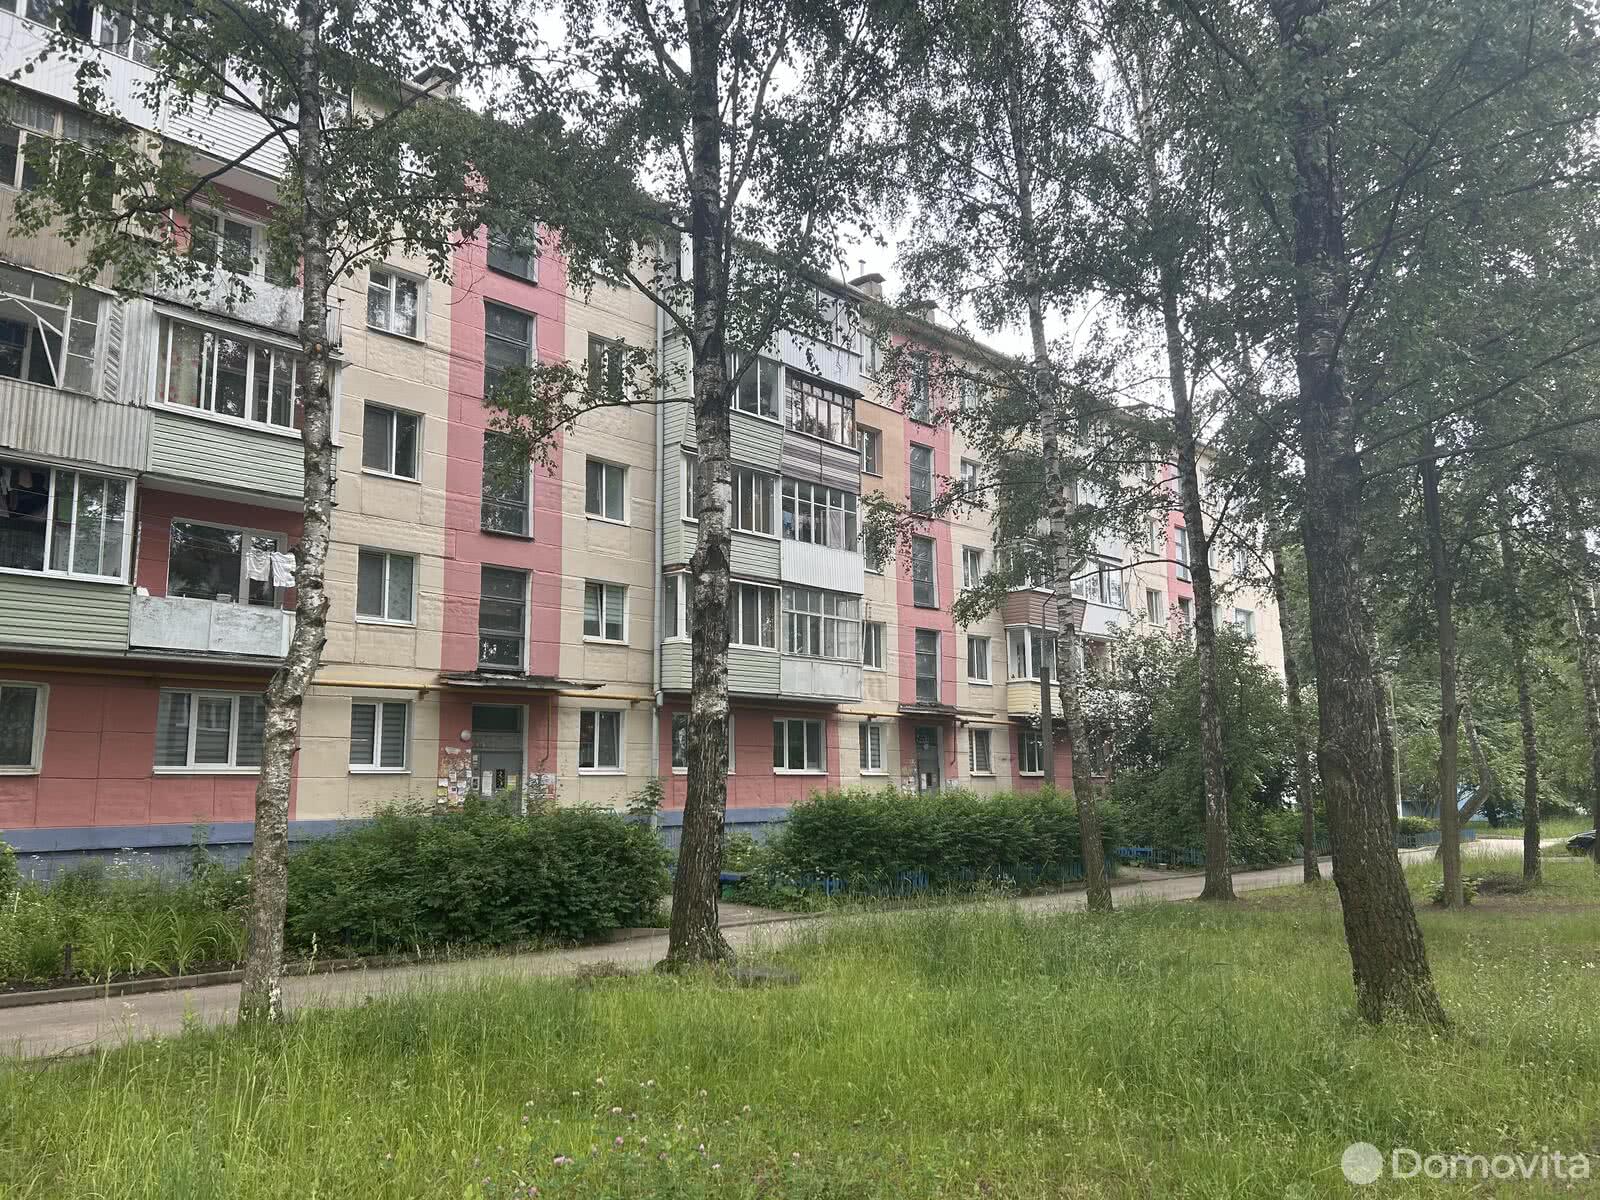 квартира, Борисов, ул. Серебренникова, д. 17, стоимость продажи 83 083 р.